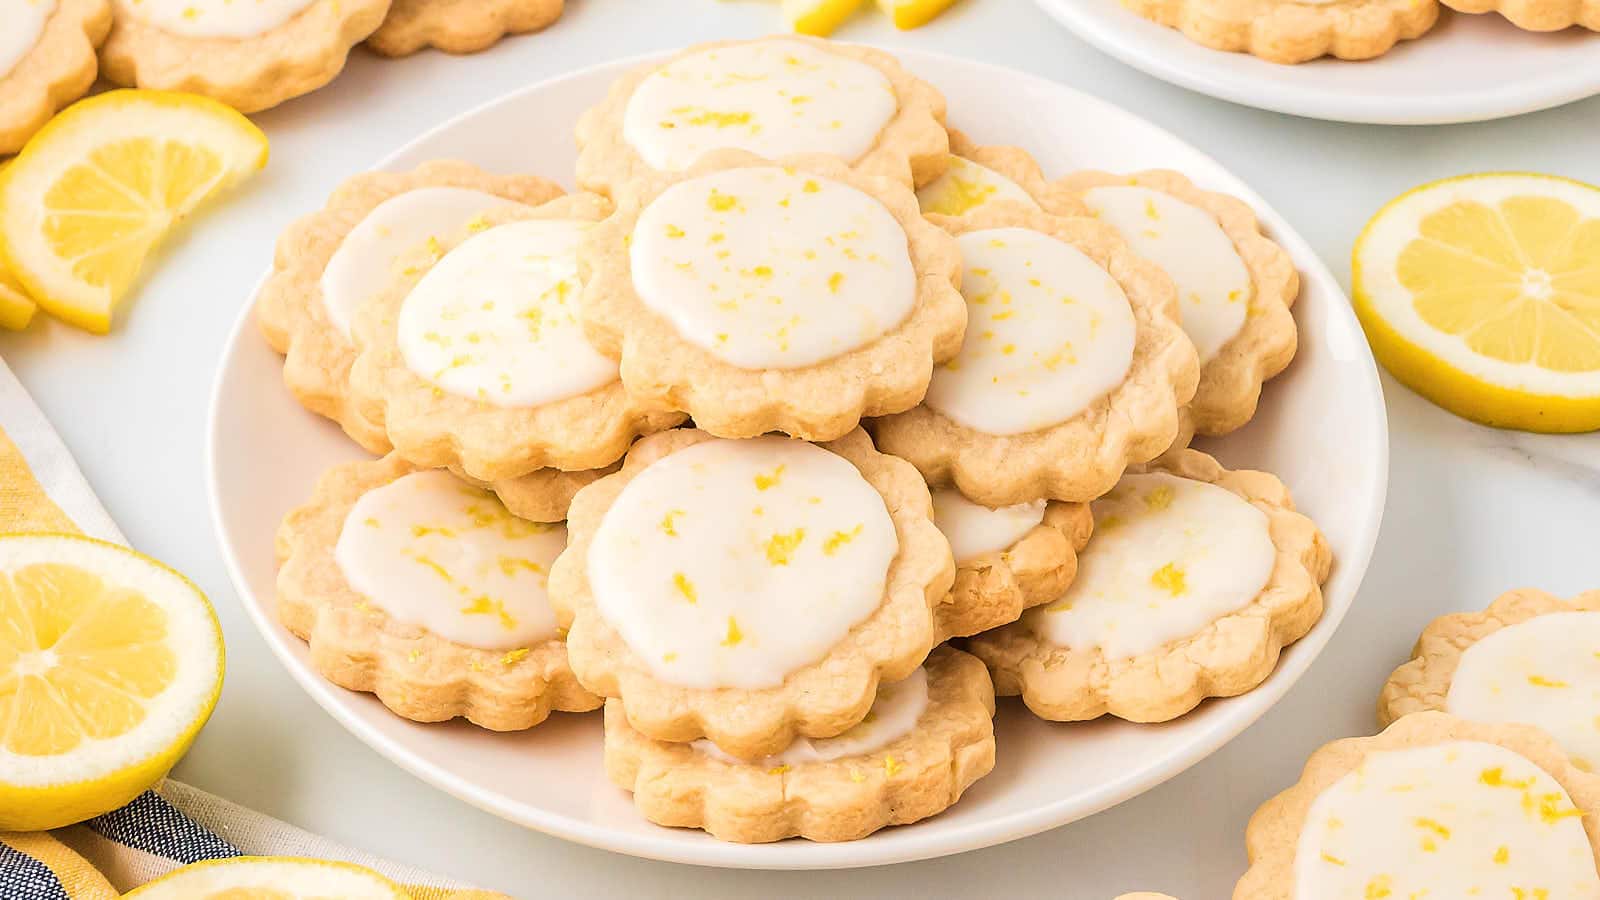 Lemon Shortbread Cookies recipe by Cheerful Cook.